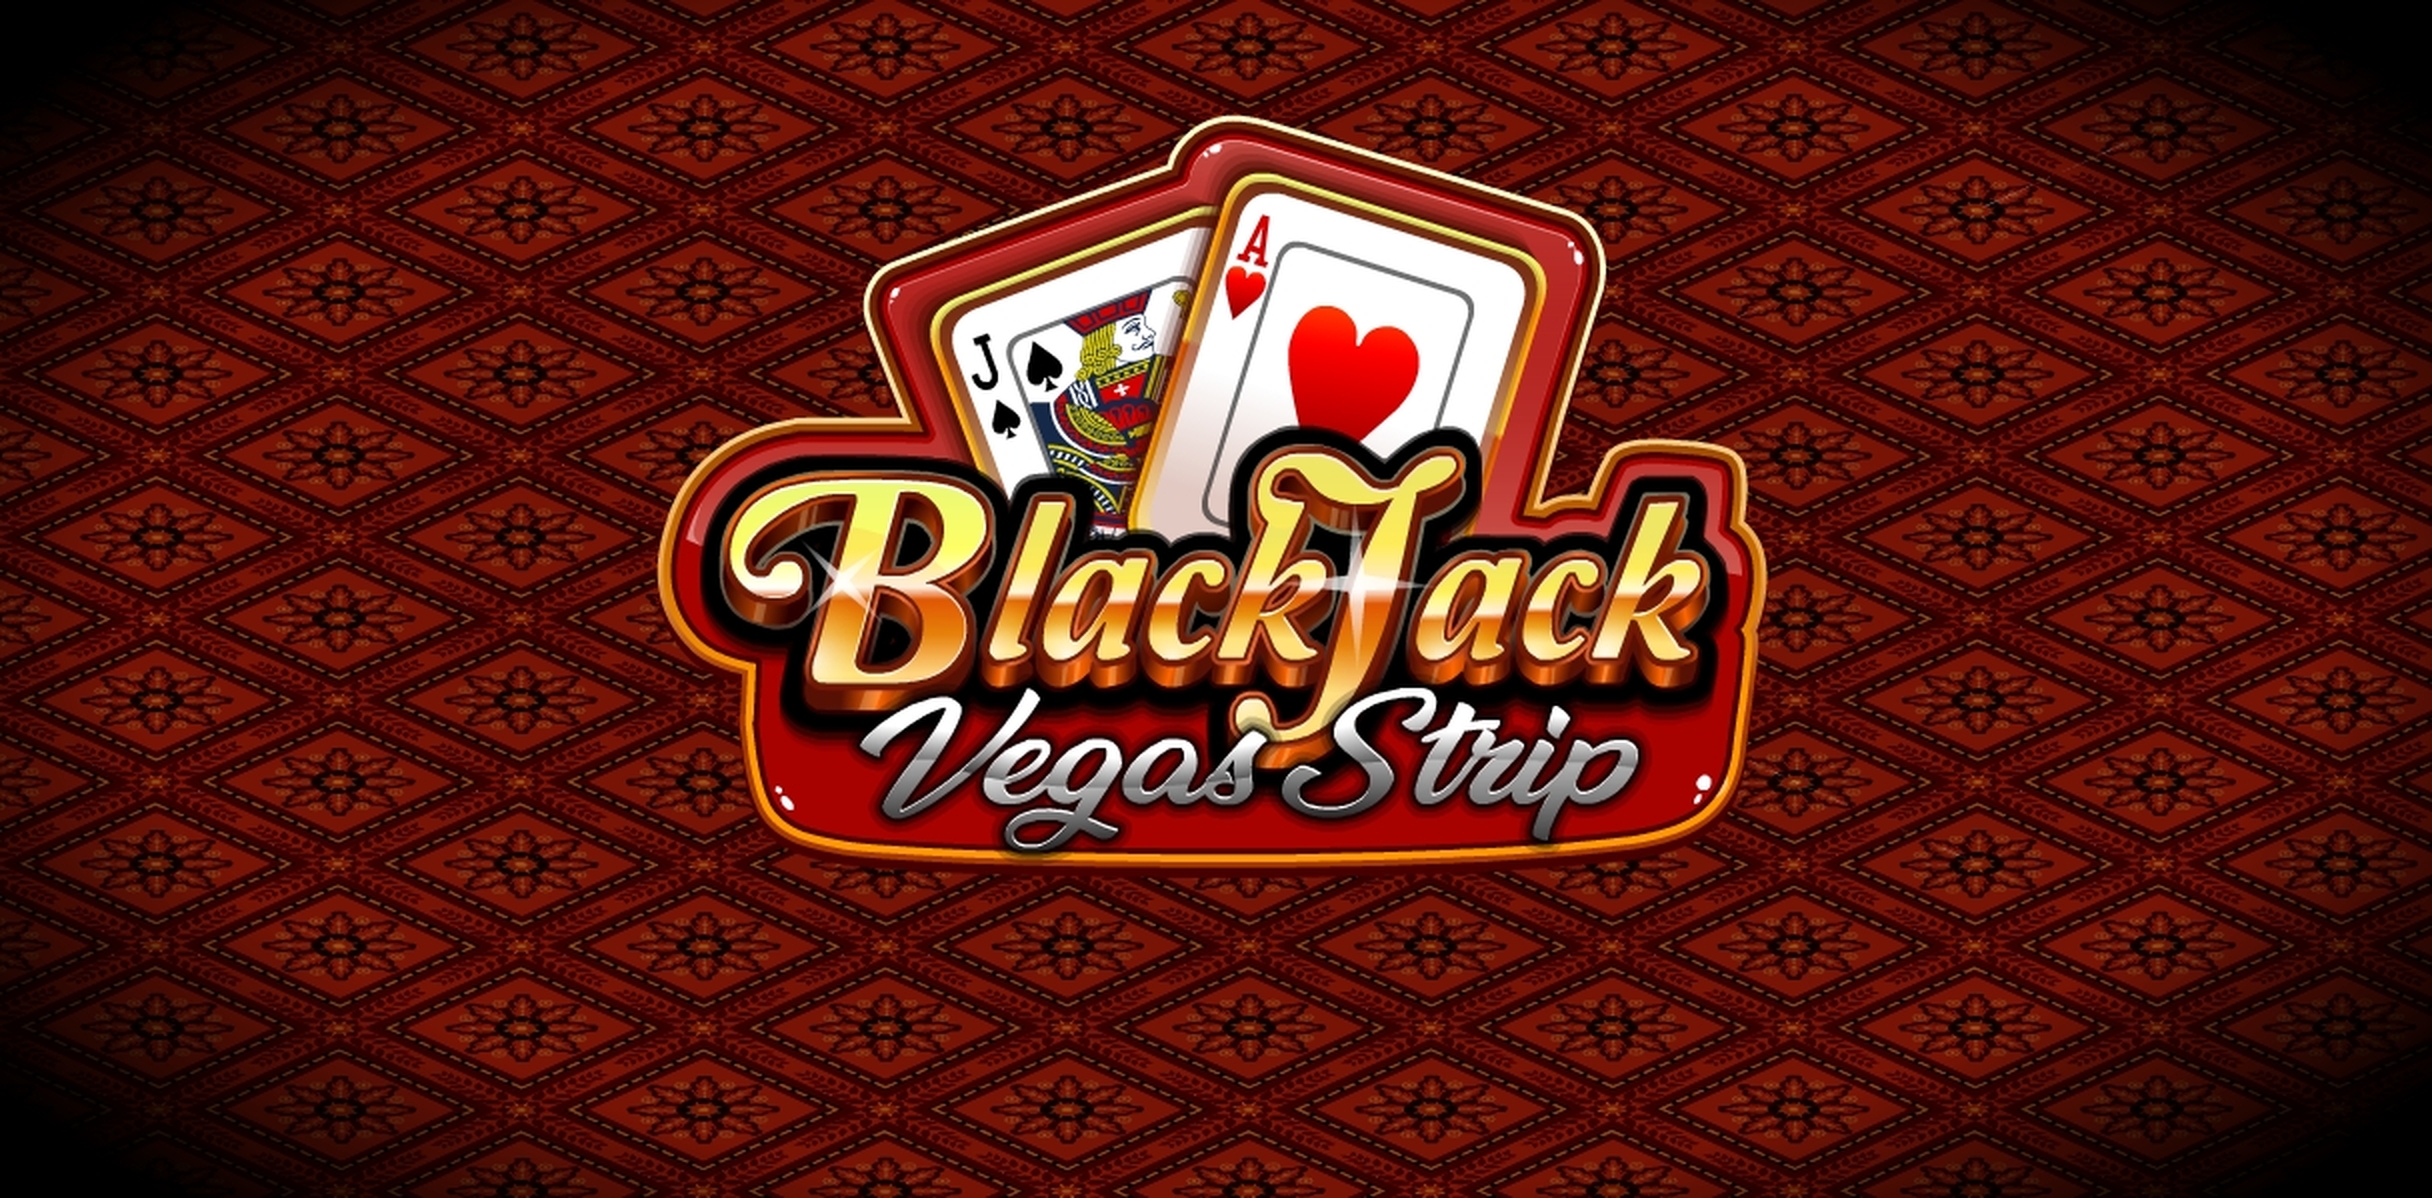 Blackjack Vegas Strip